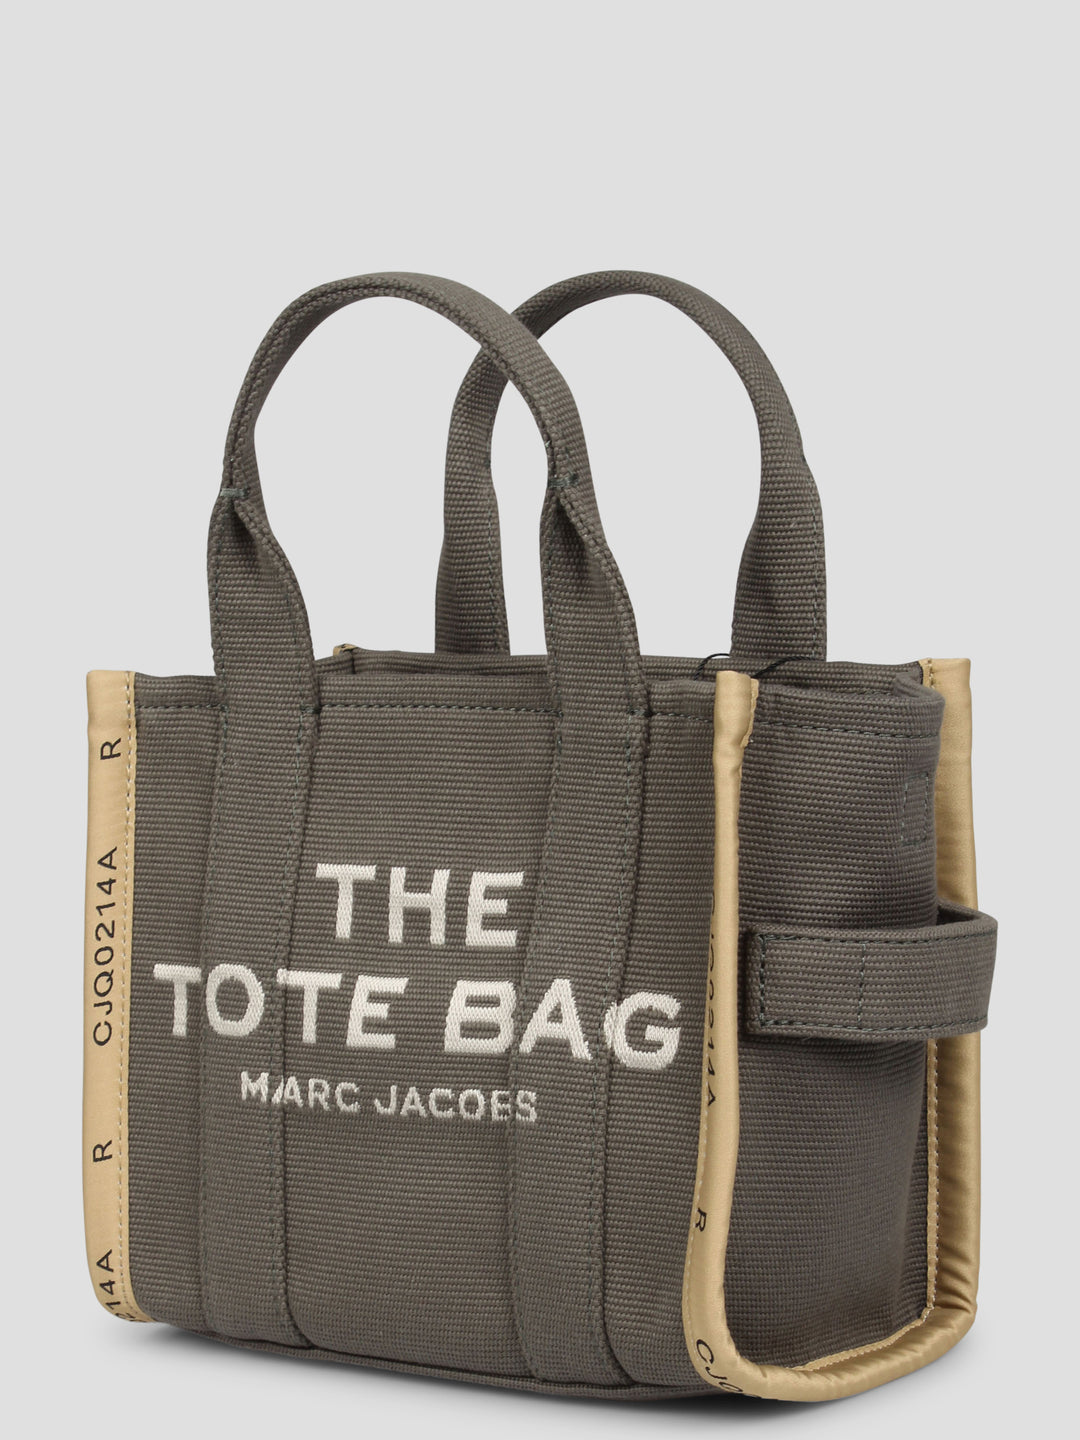 The jacquard medium tote bag